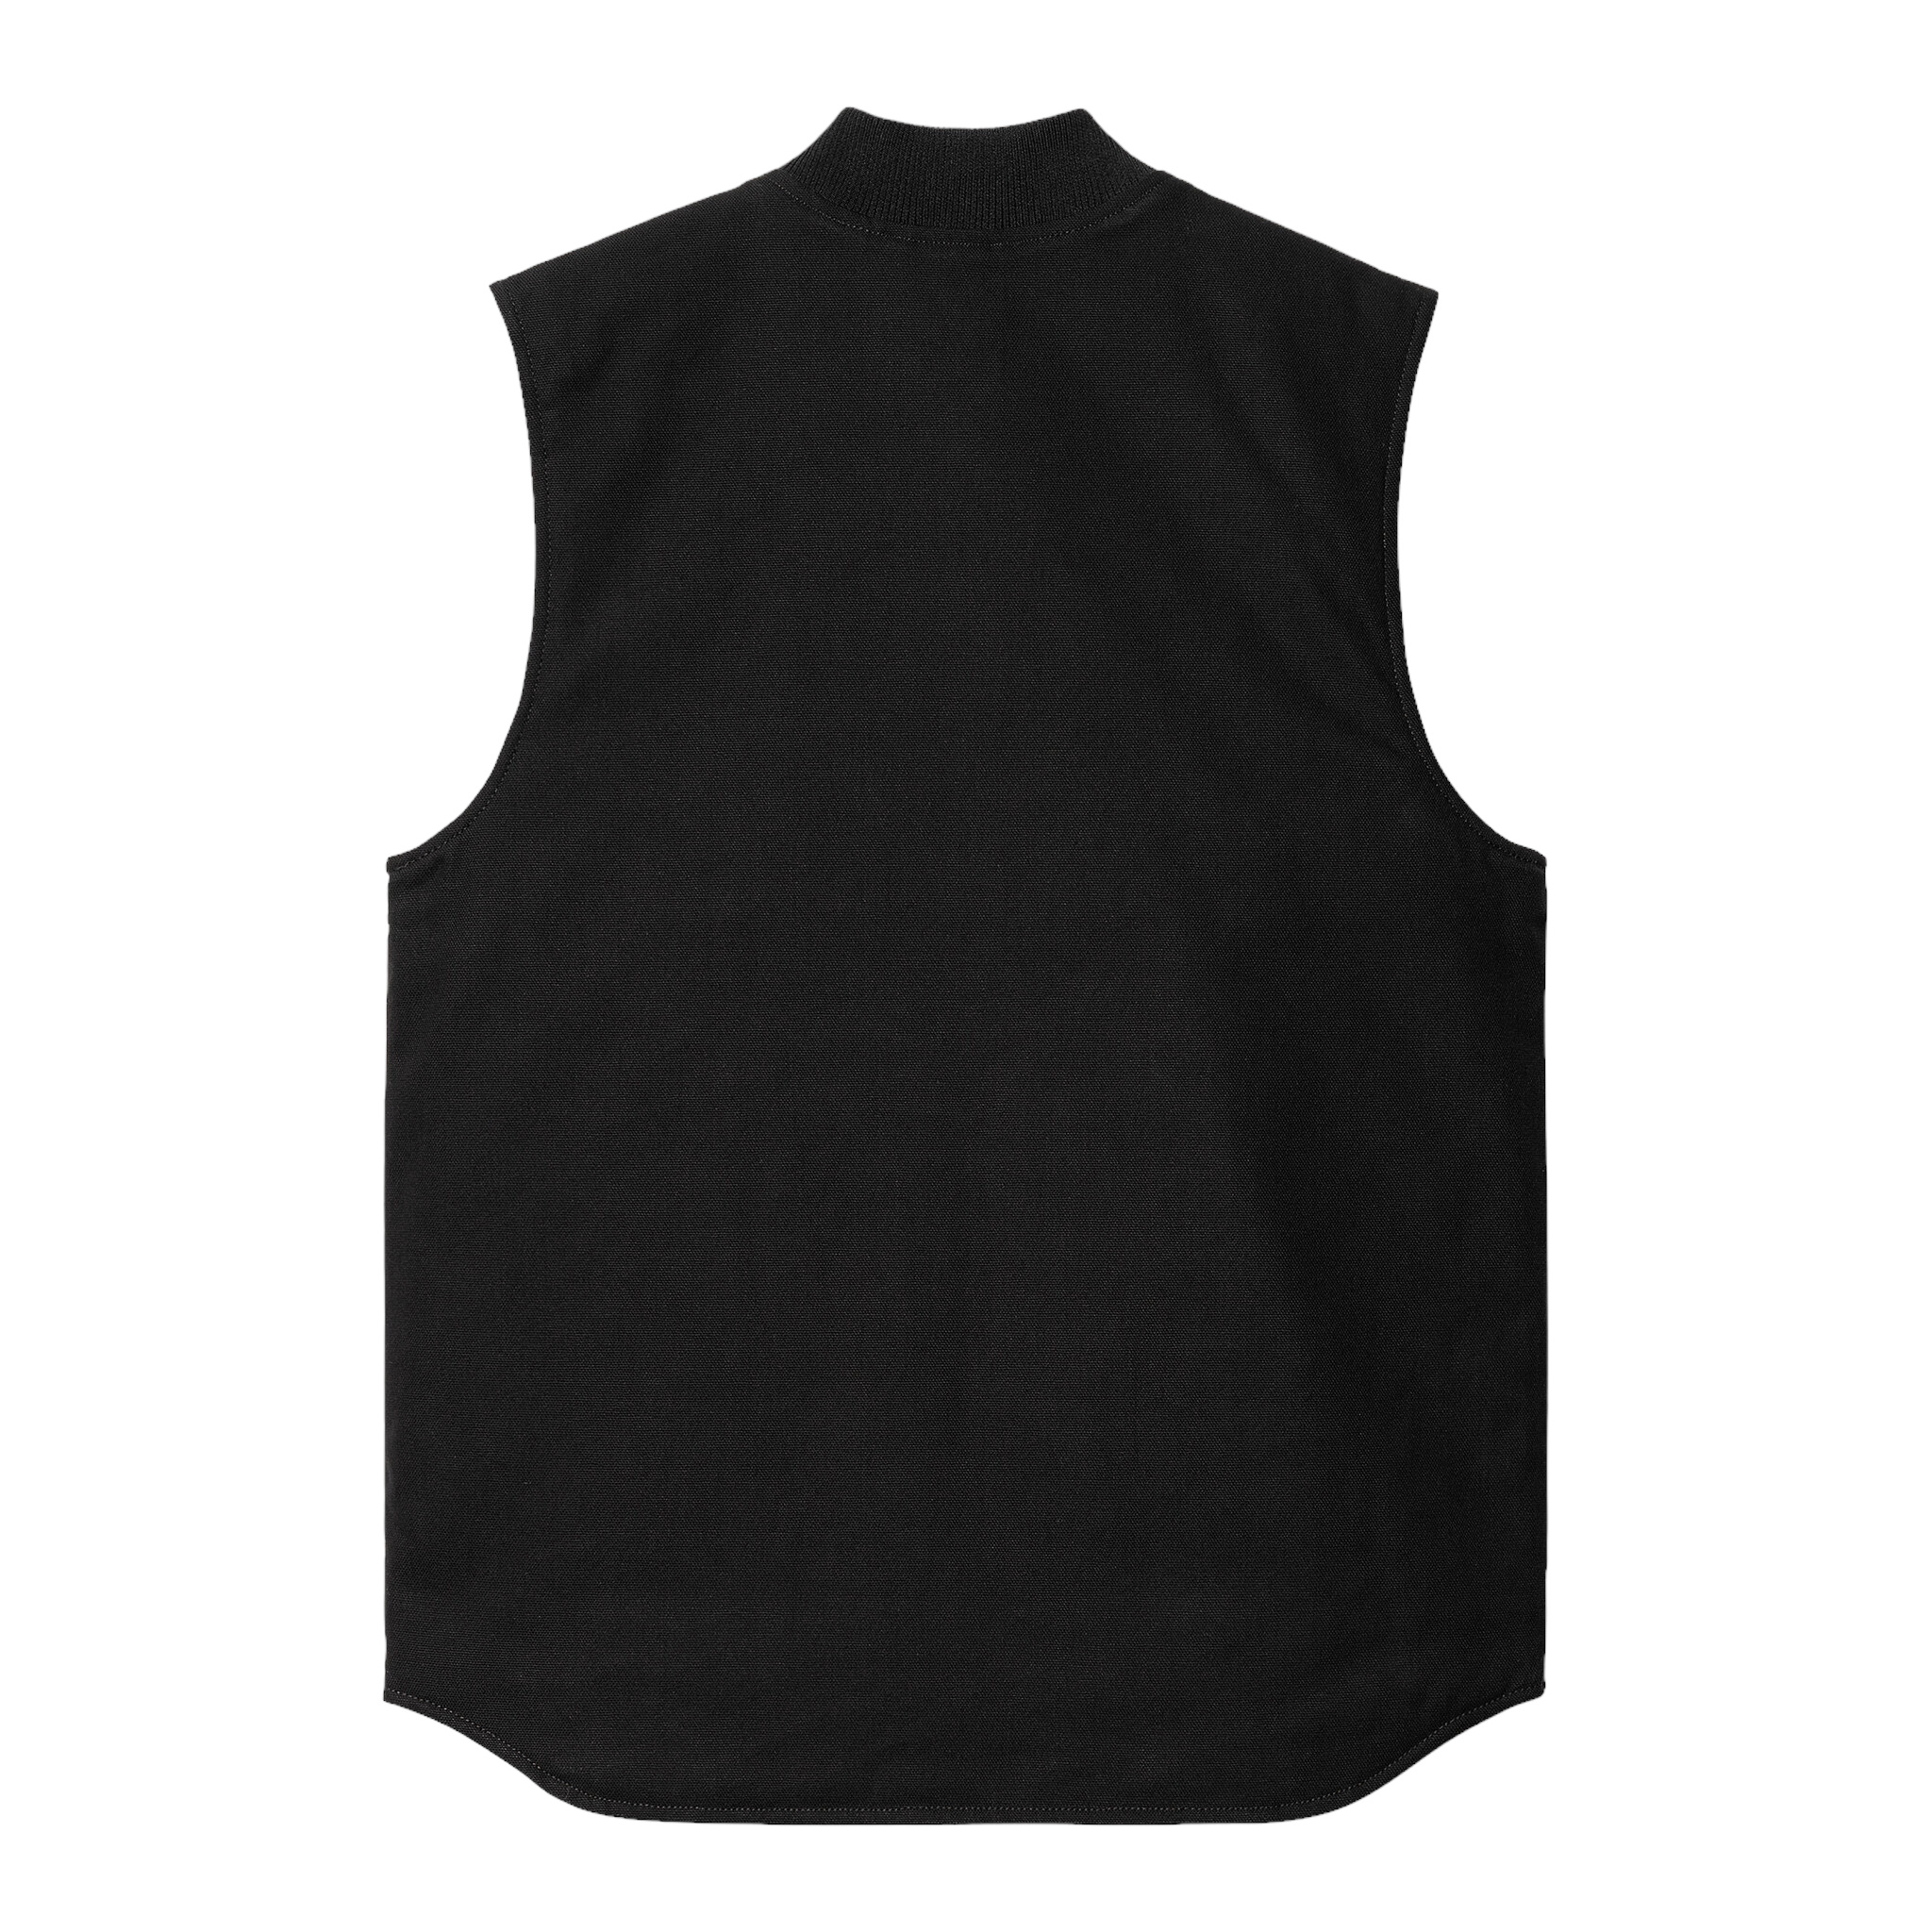 Carhartt WIP Vest - Black (Rigid)